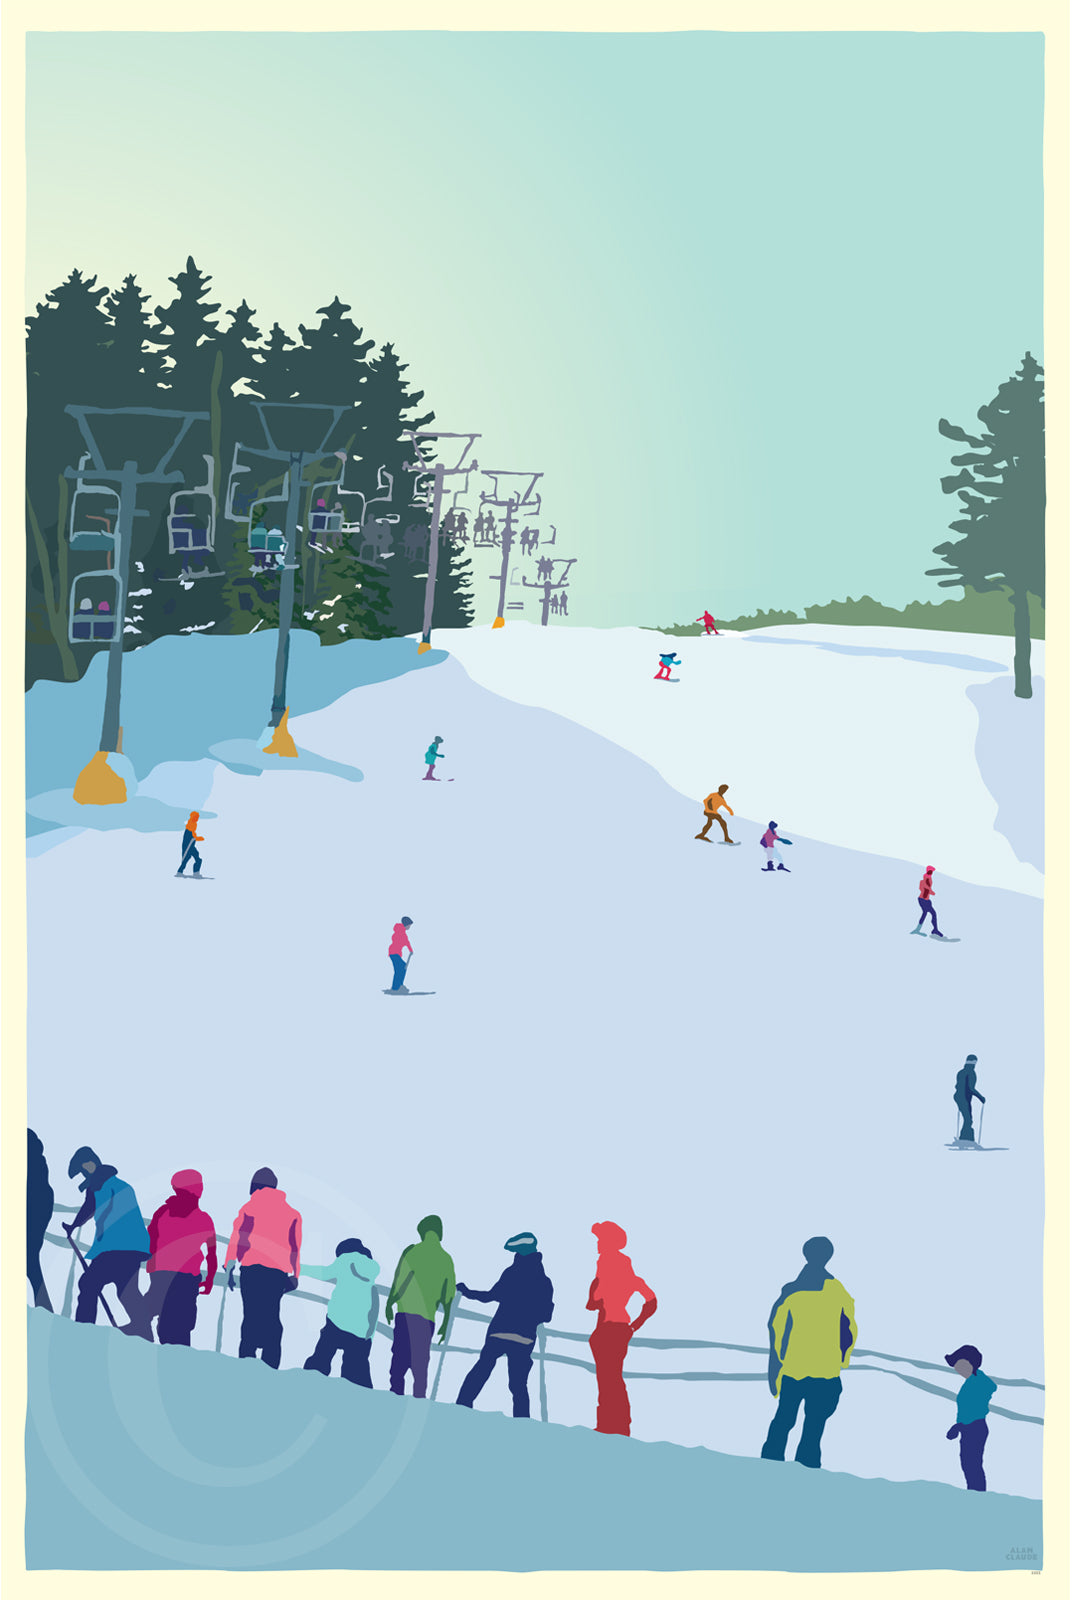 Skiing Snow Bowl Art Print 36" x 53" Wall Poster - Maine